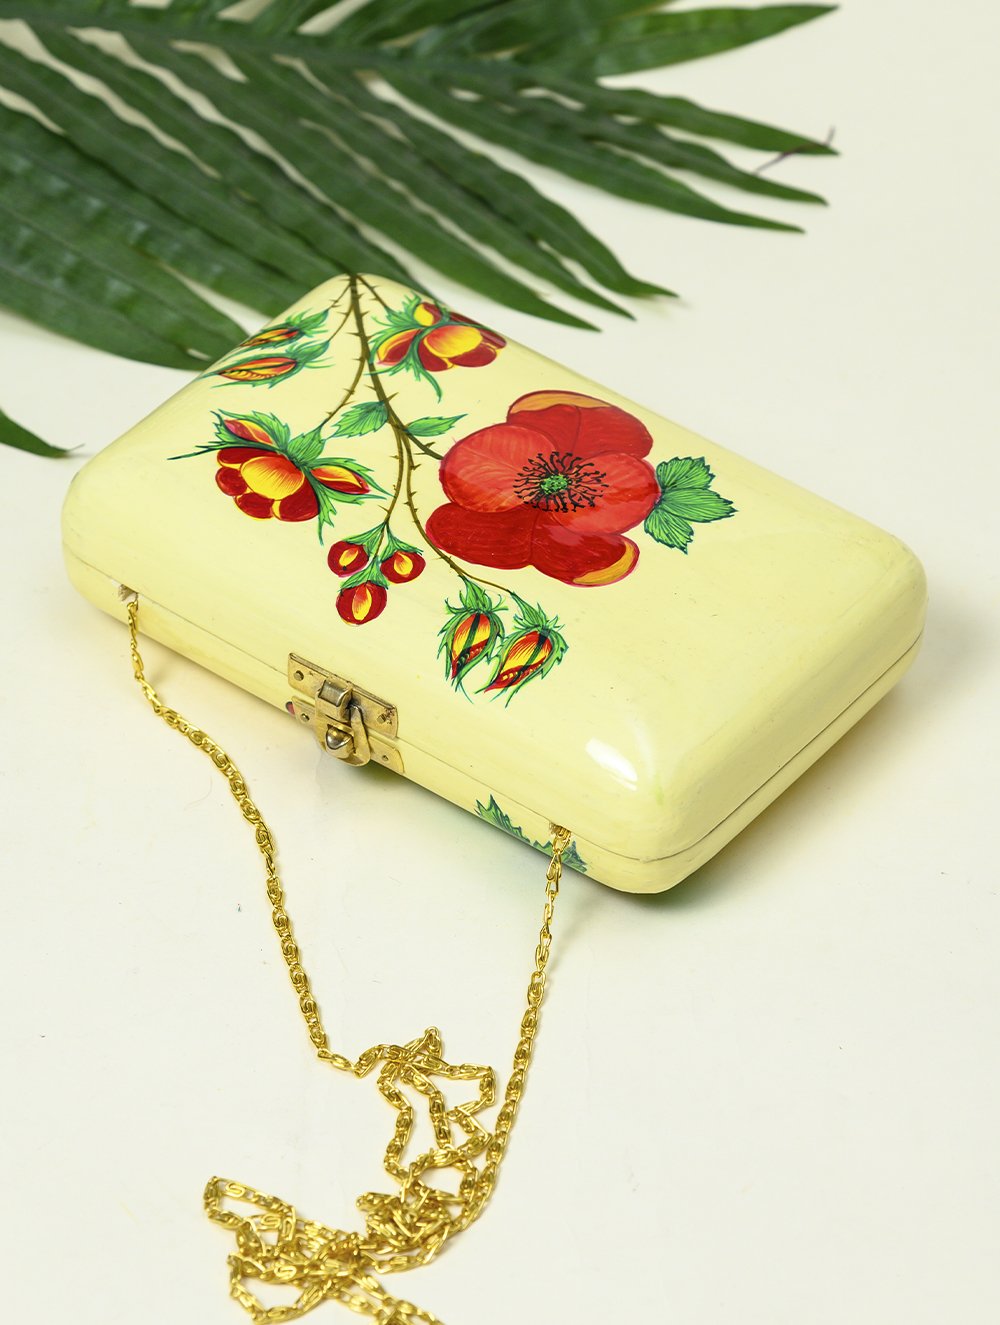 Finding Enid with LOVE - Papier Mâché White Flower on Copper, Casket Box Bag  by Enid Collins